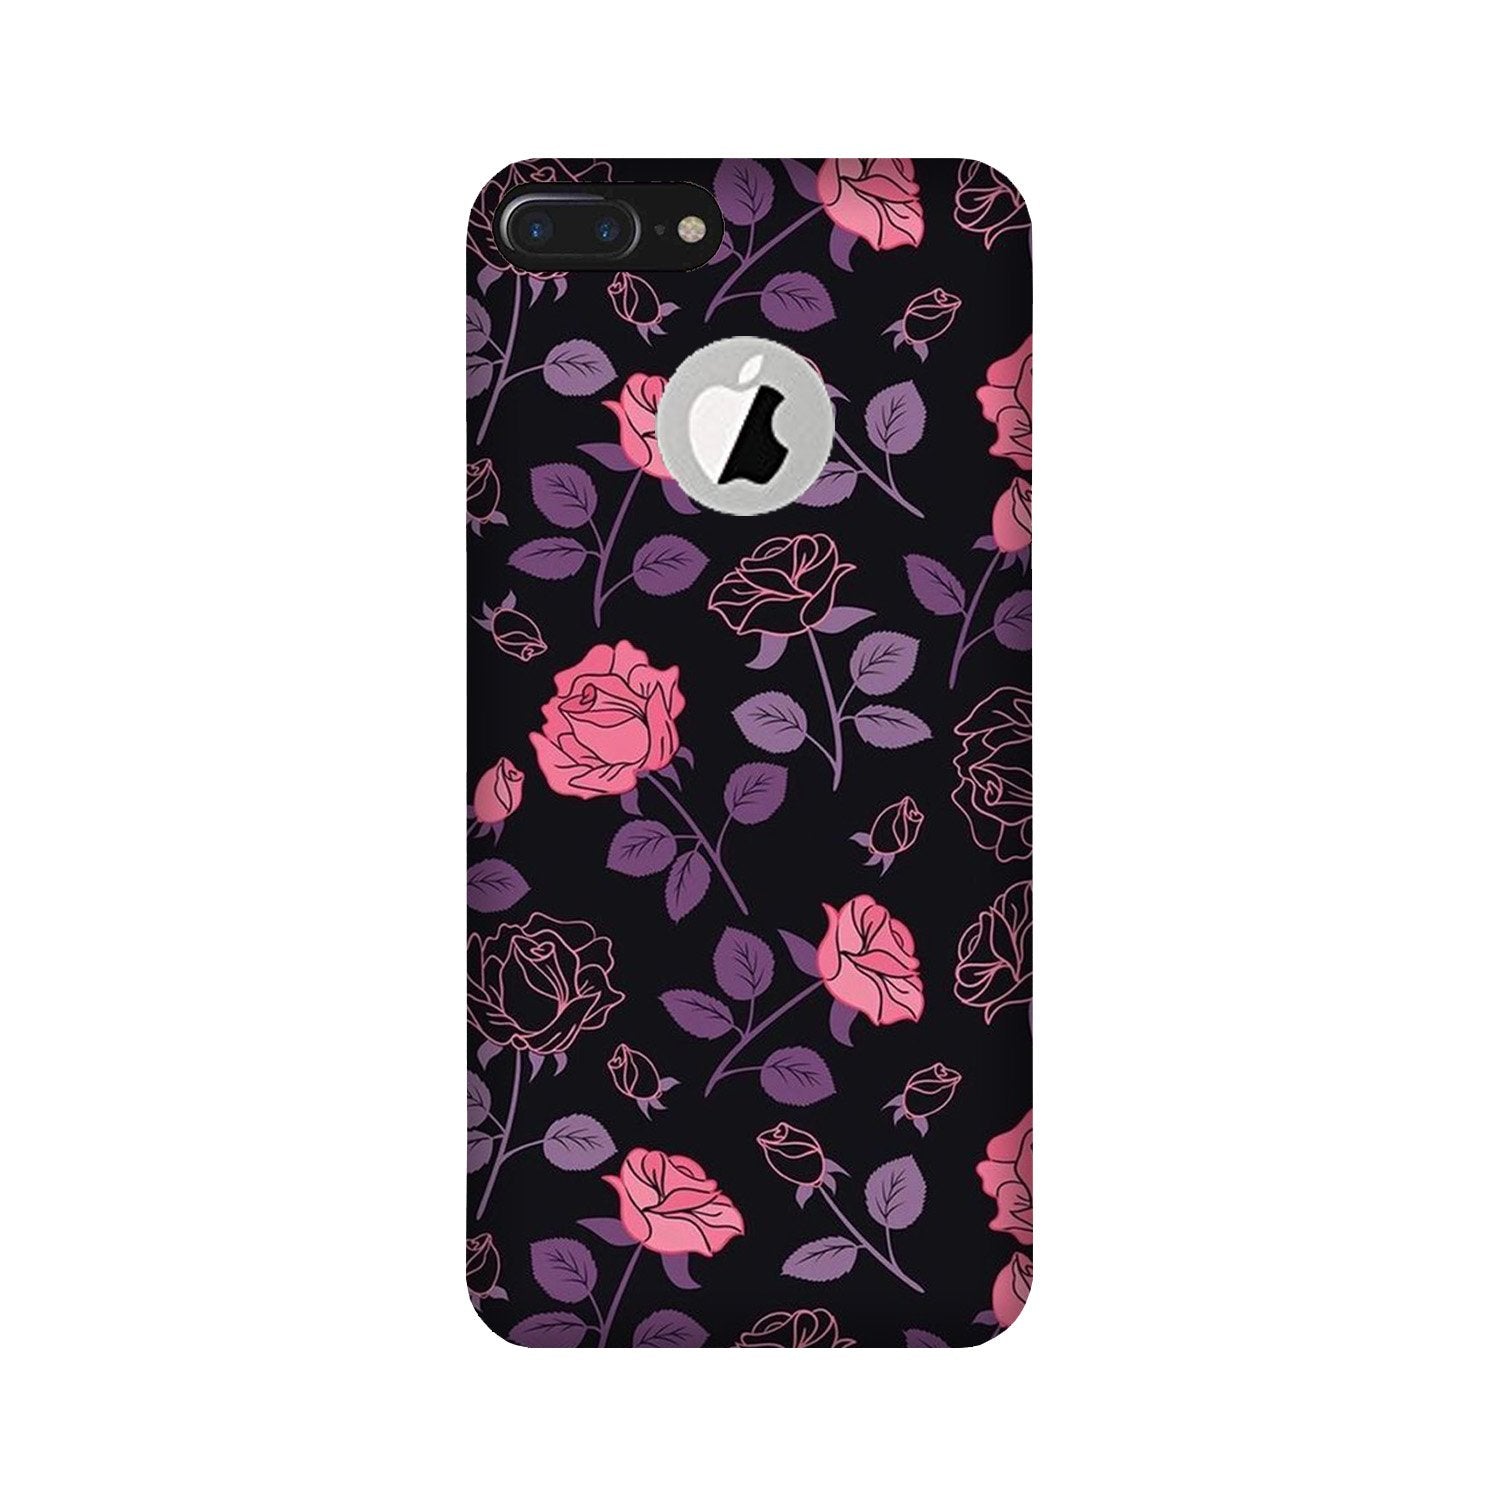 Rose Black Background Case for iPhone 7 Plus logo cut